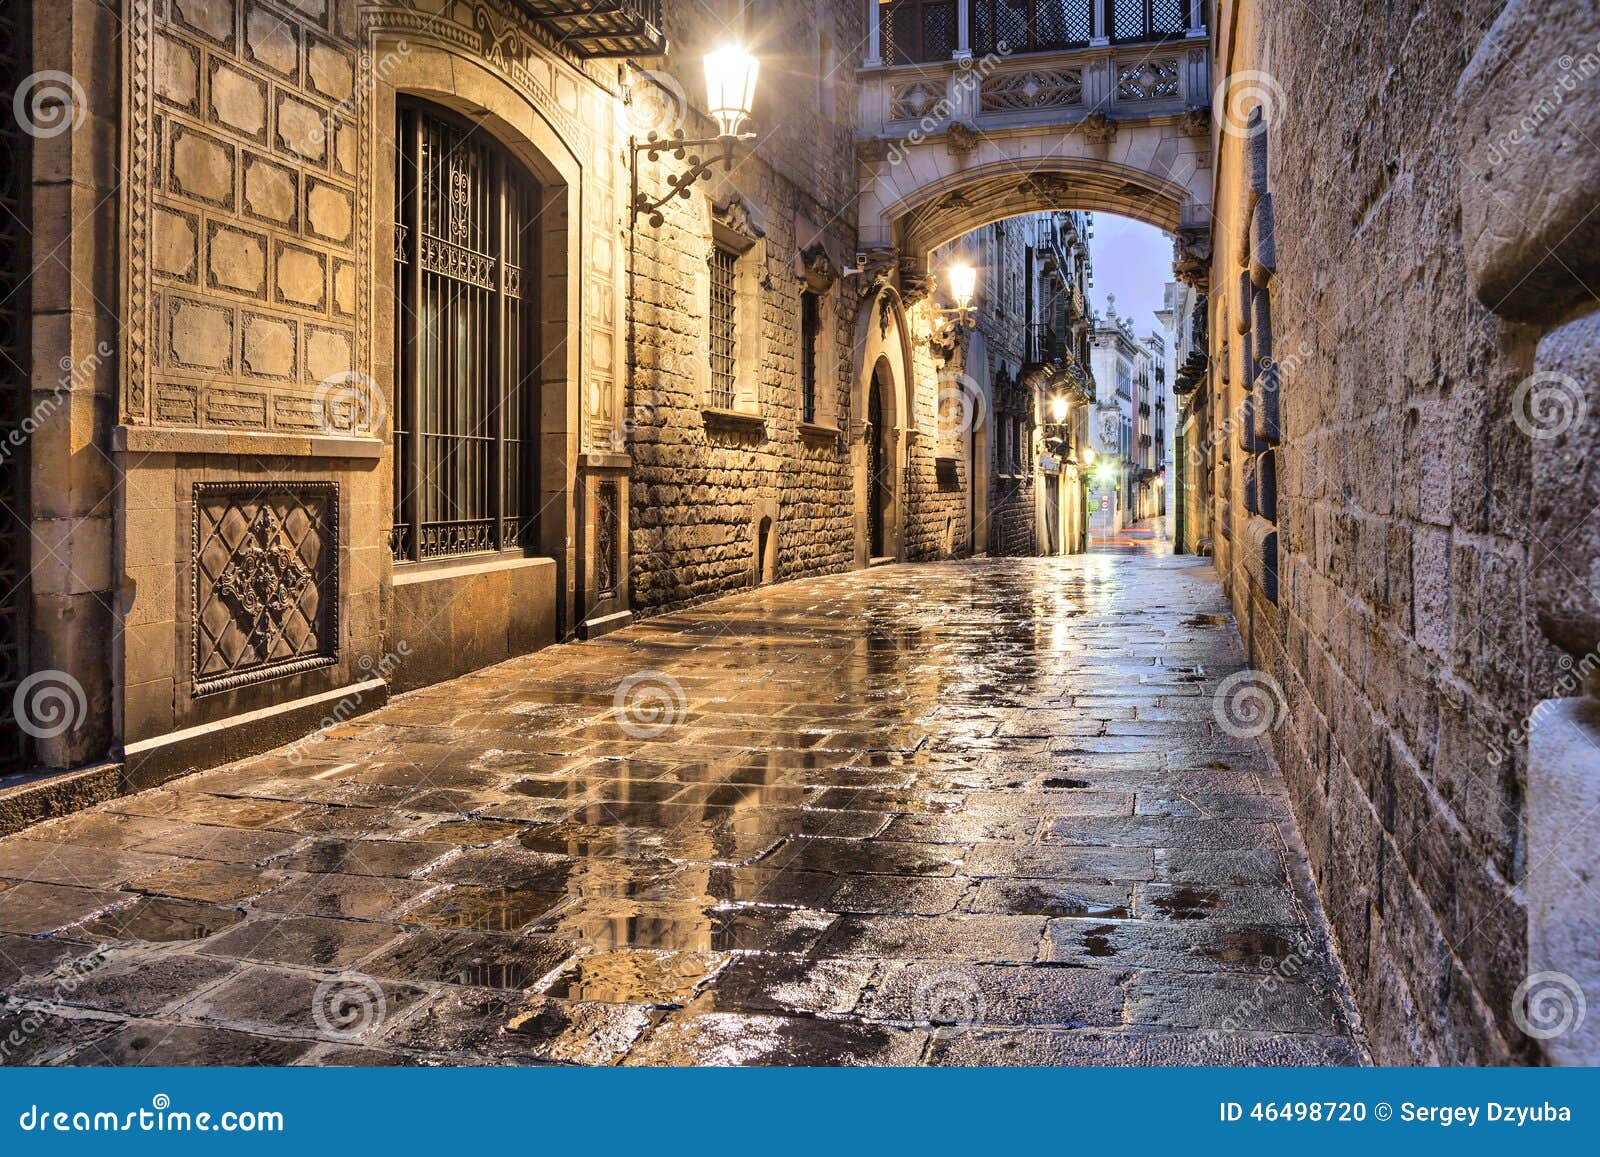 narrow street in gothic quarter, barcelona